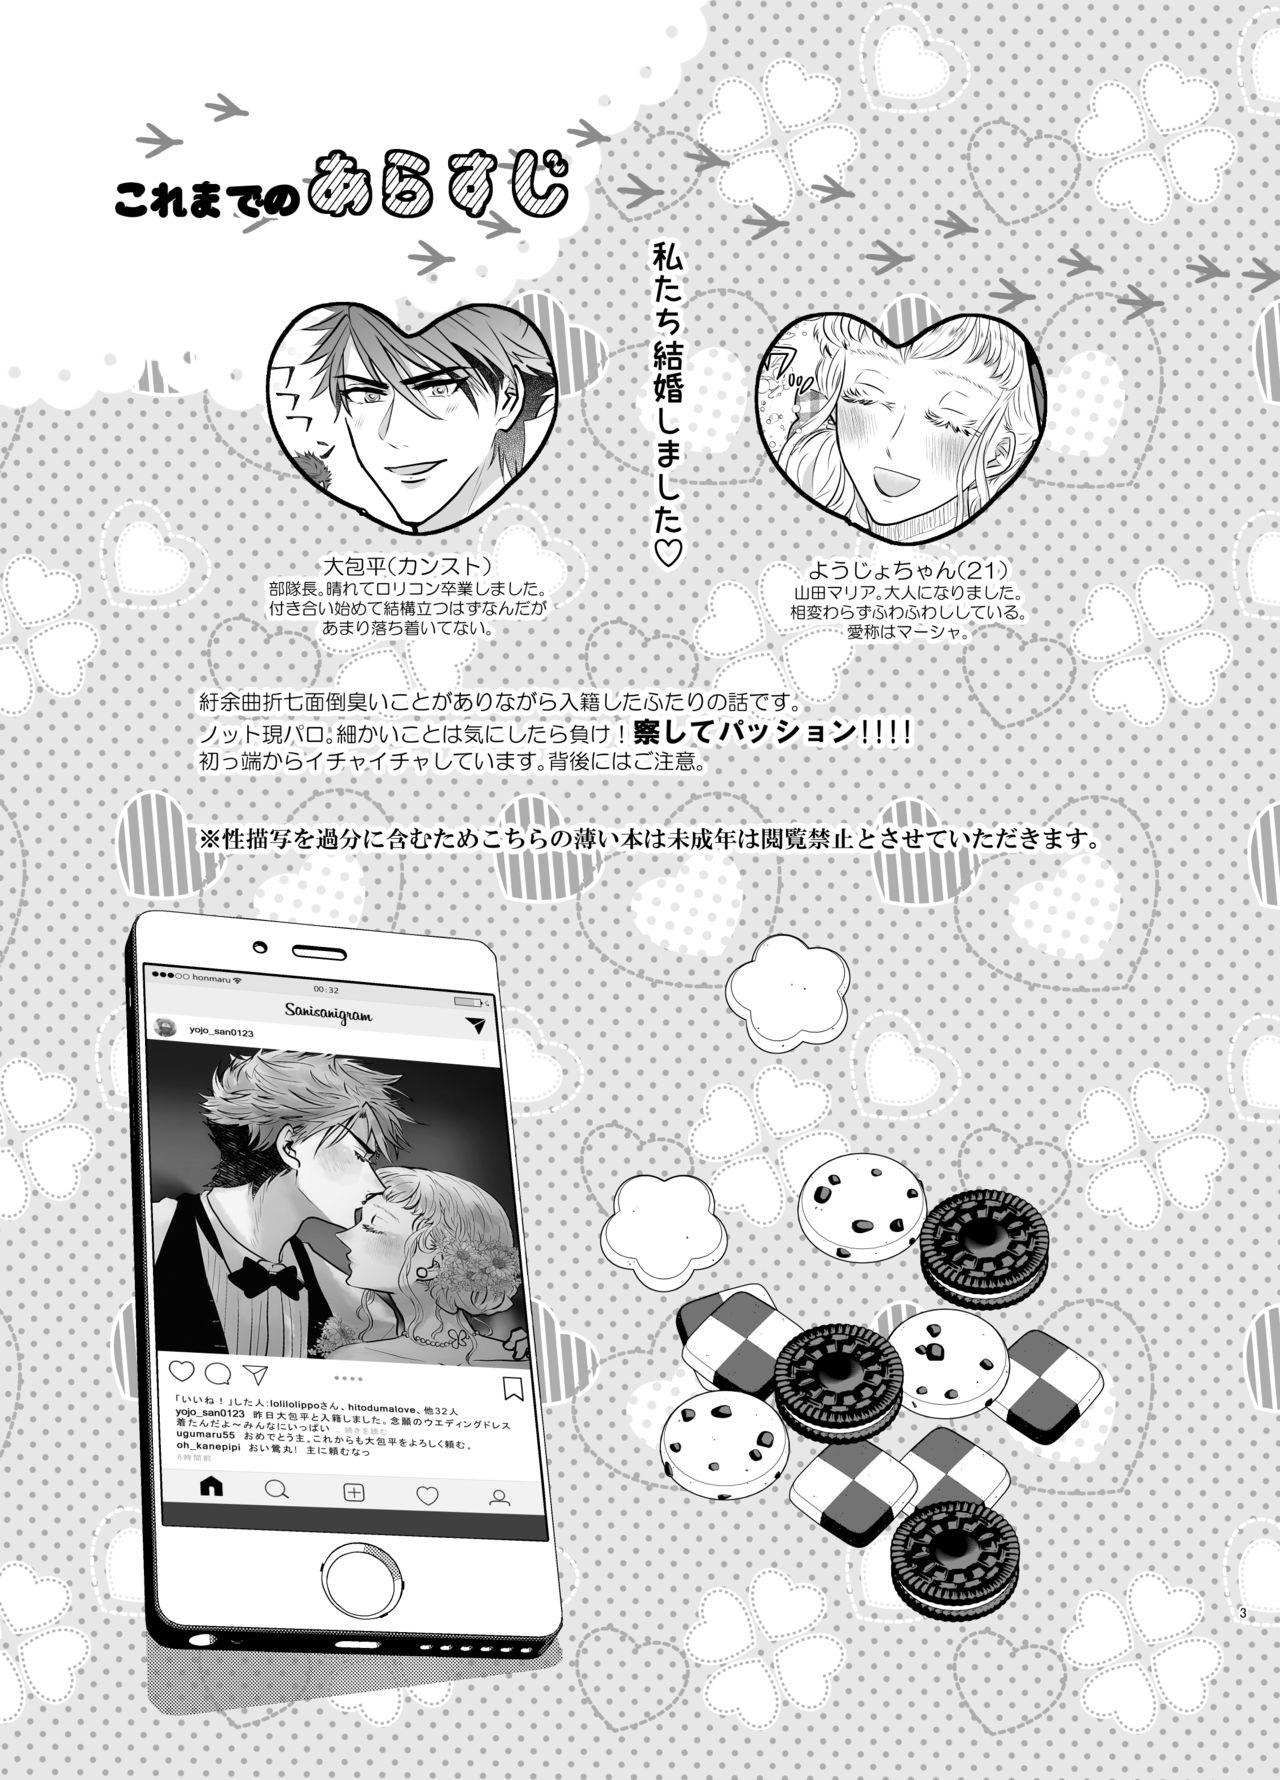 Nut Shinkon-san Irassha~i - Touken ranbu Latex - Page 2